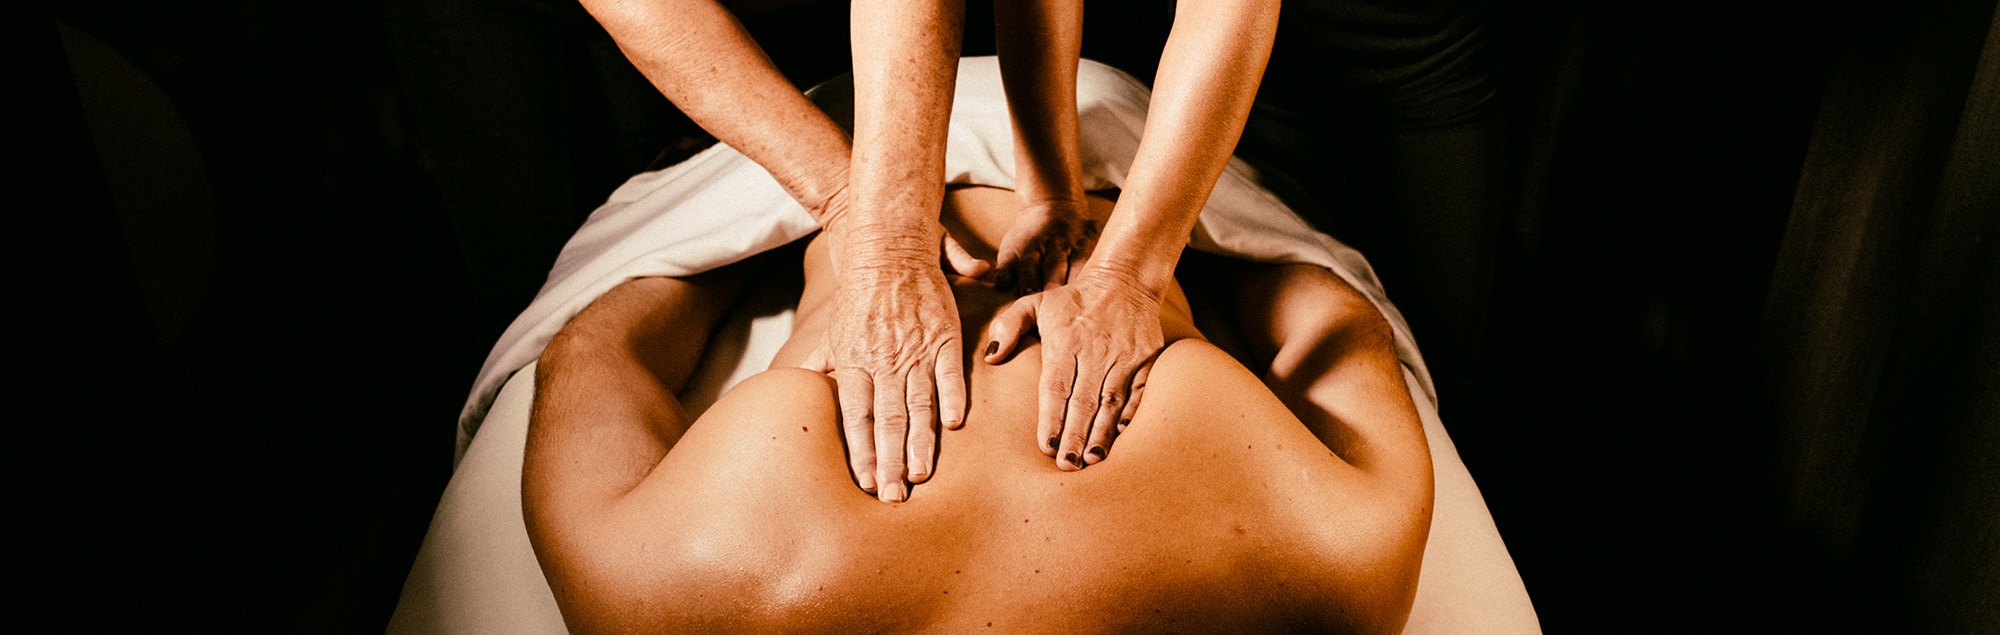 Mp4 massage